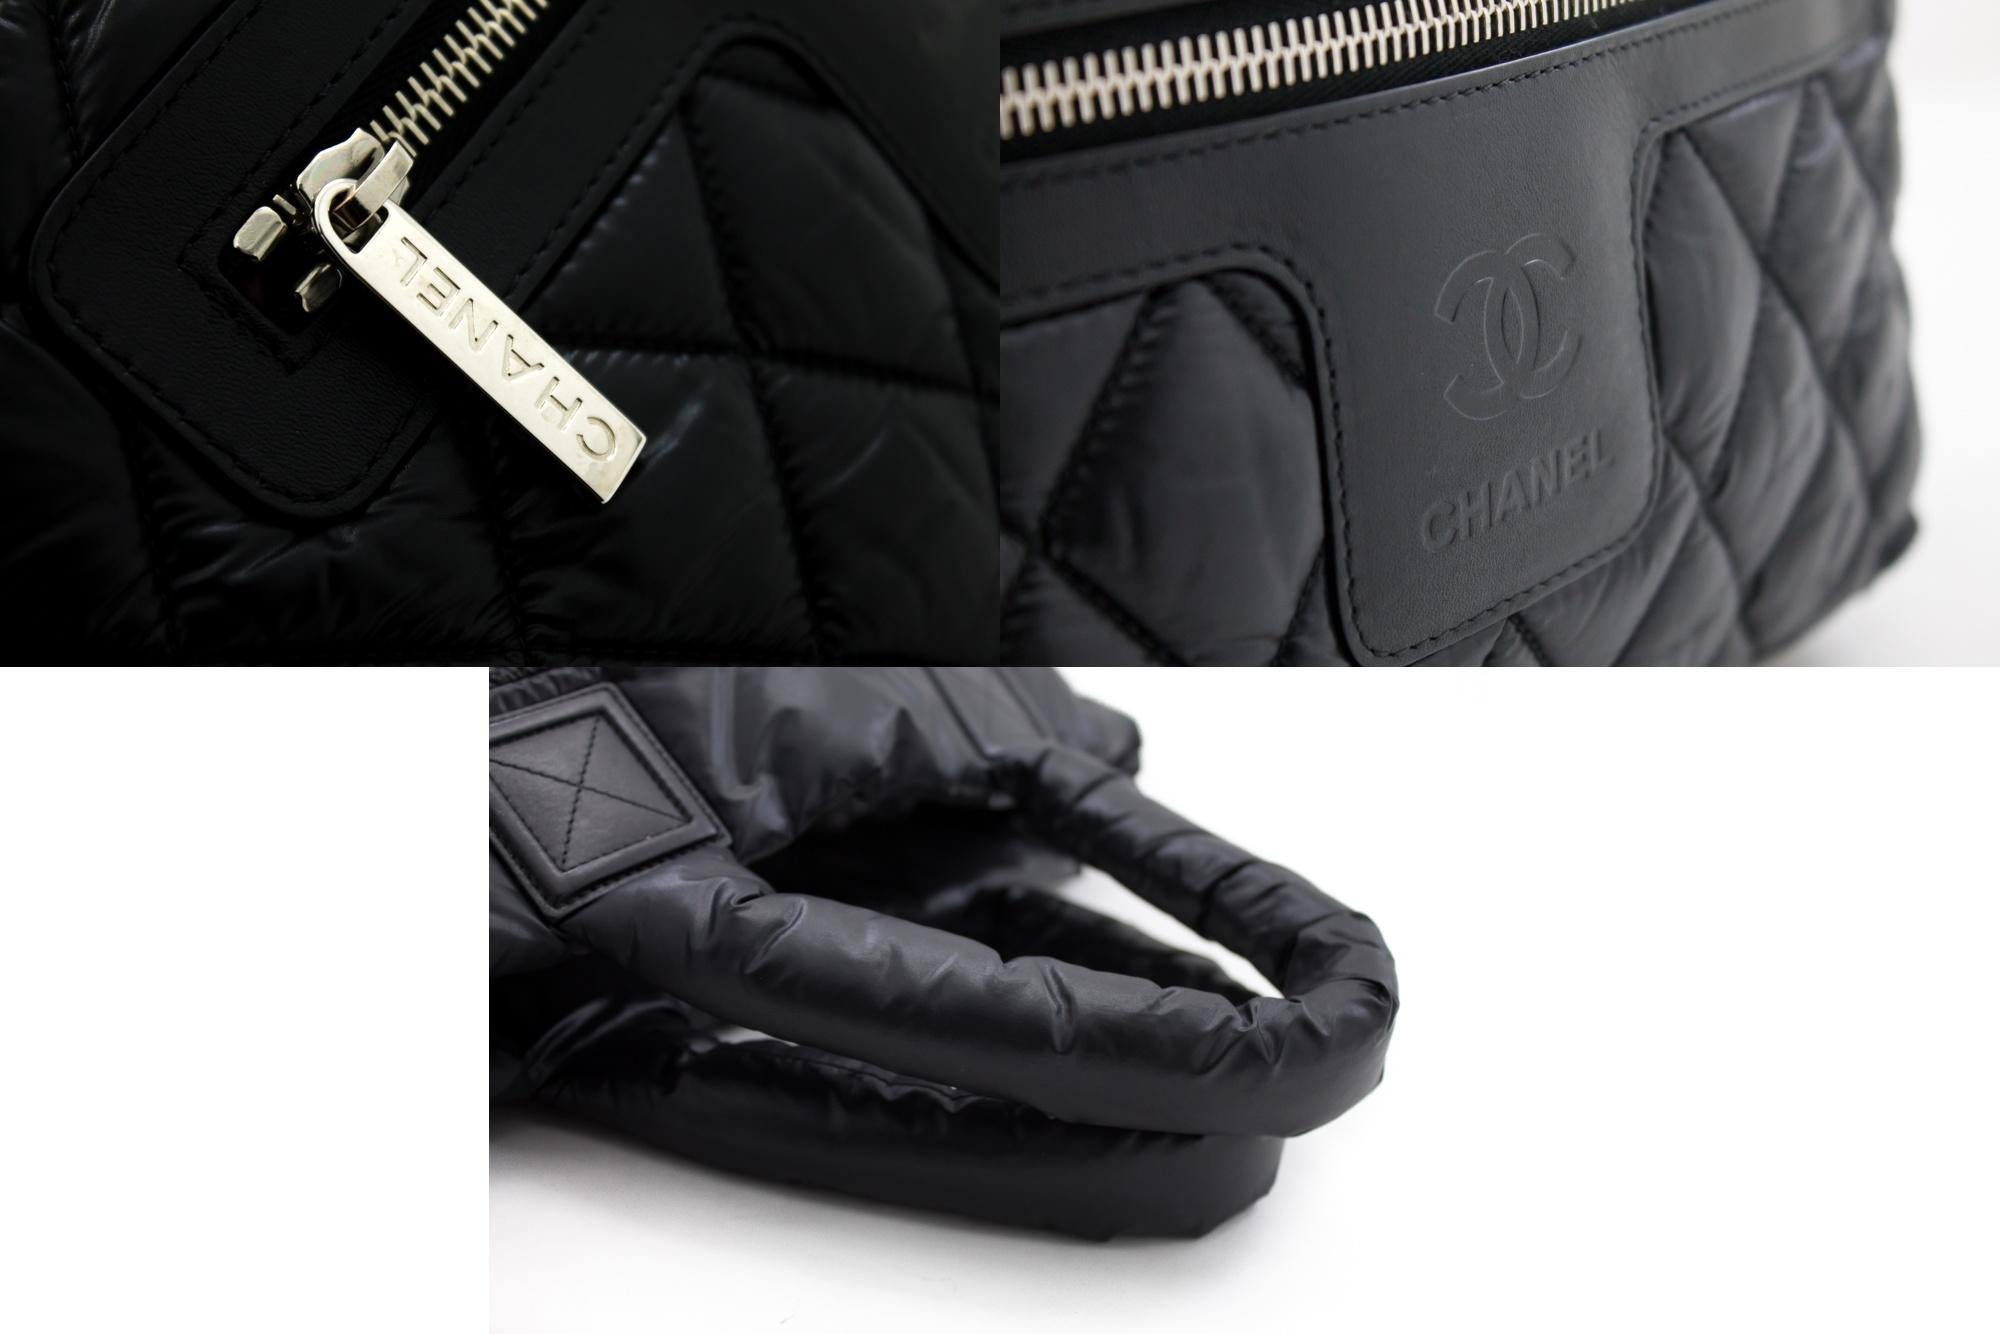 CHANEL Coco Cocoon Nylon Tote Bag Handbag Black Bordeaux Leather 3